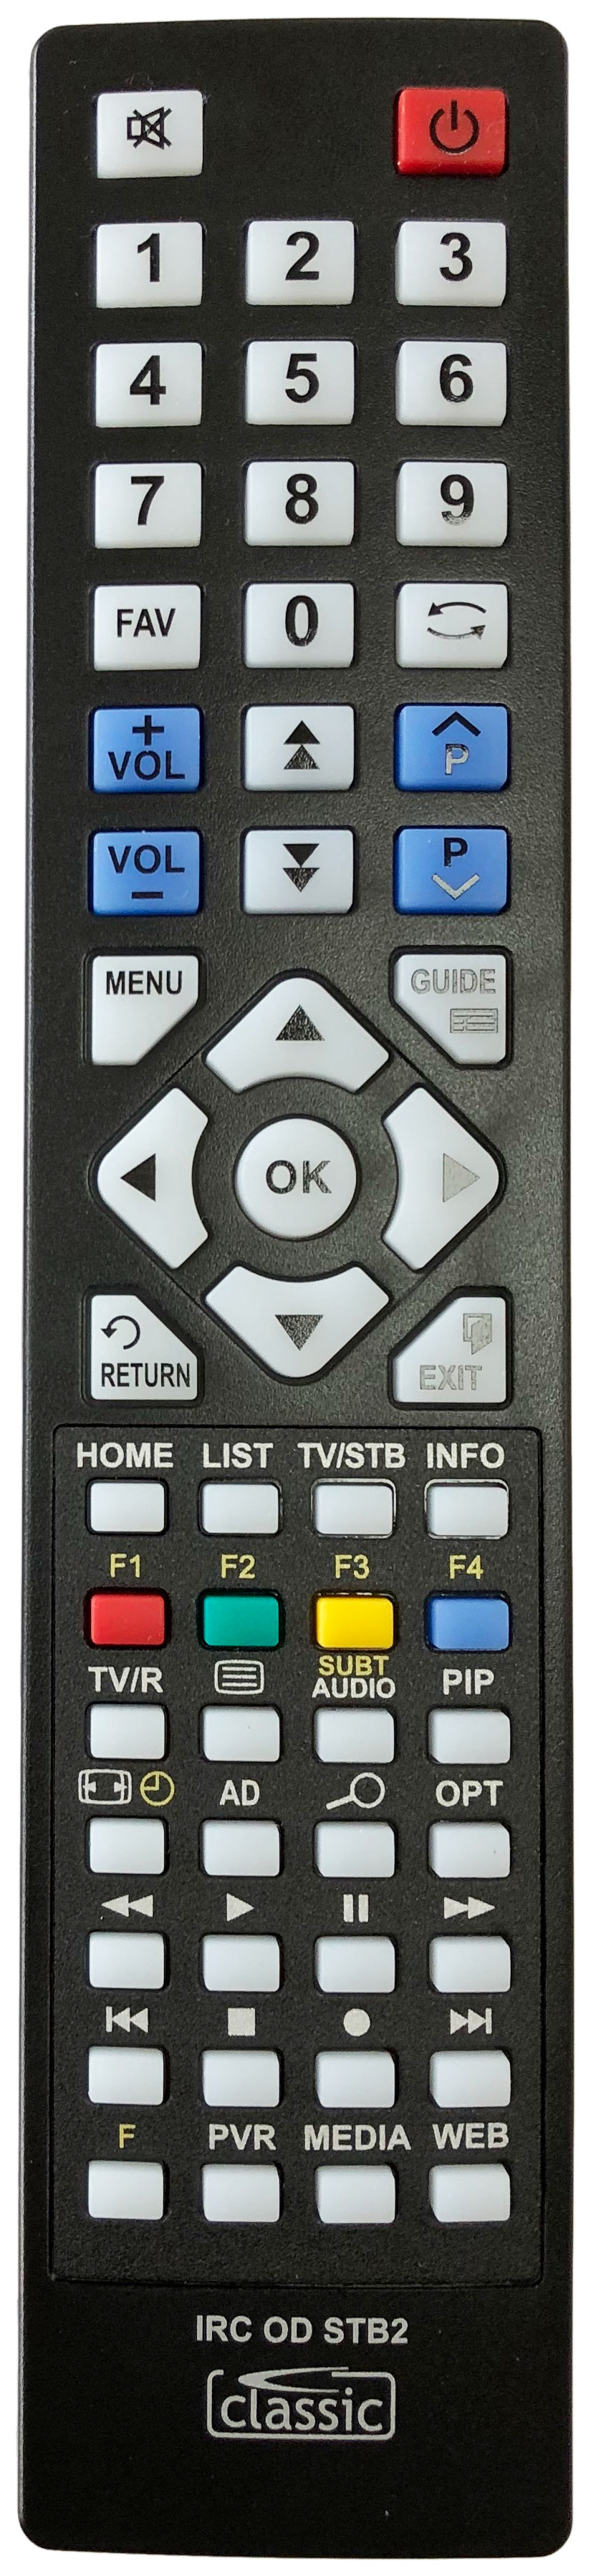 HUMAX HDR-1800T Remote Control Alternative